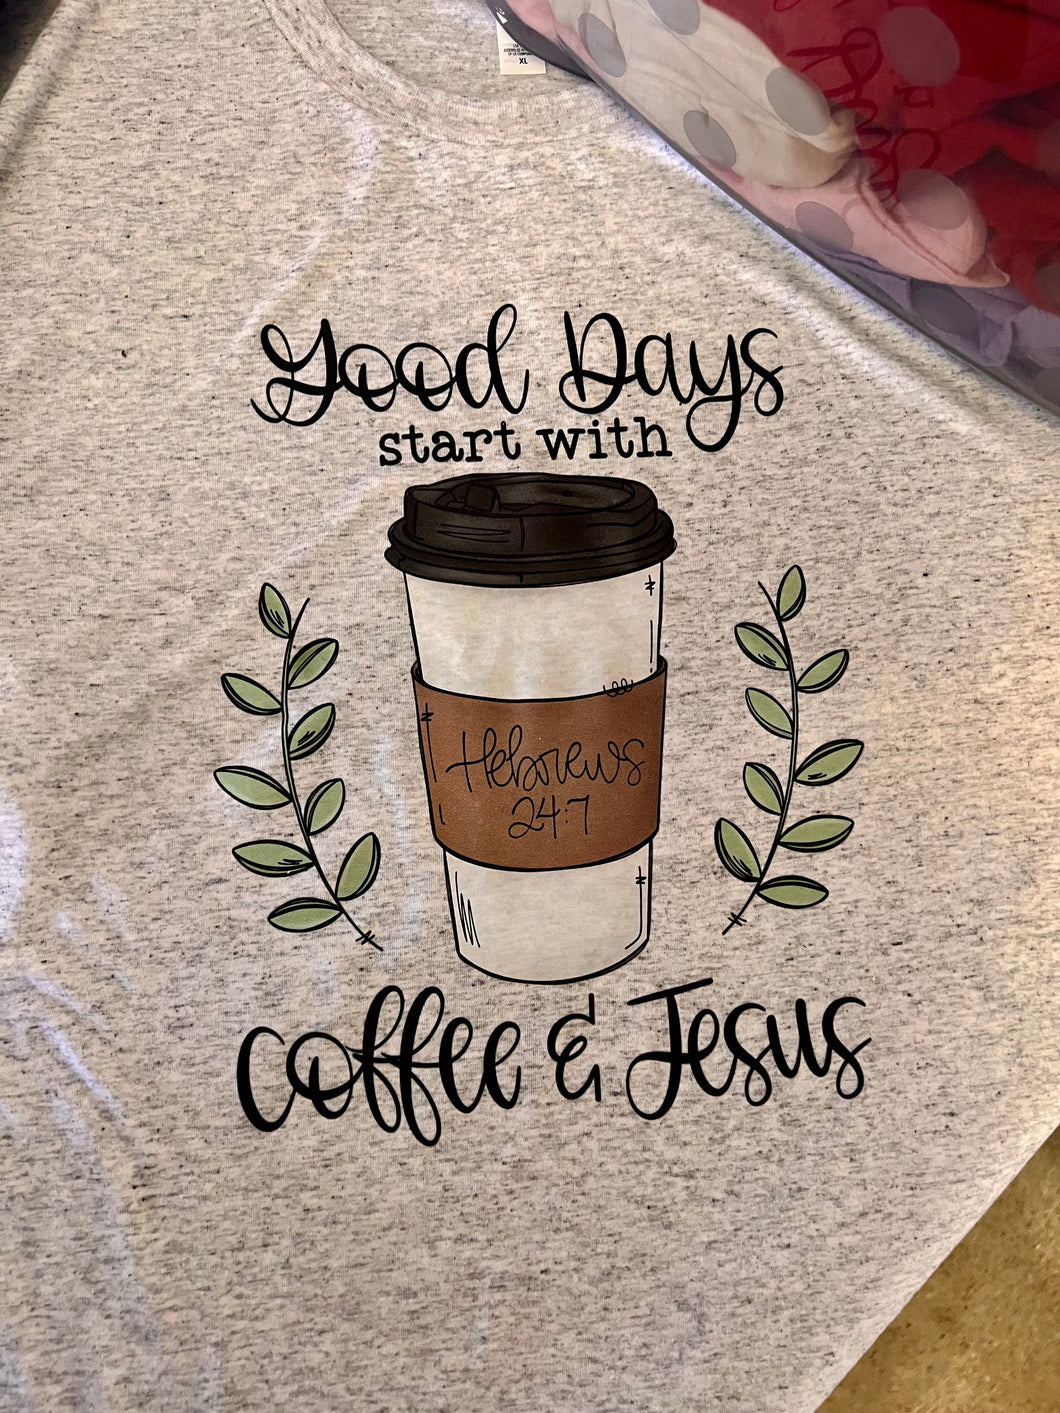 Good Days start with Coffee & Jesus